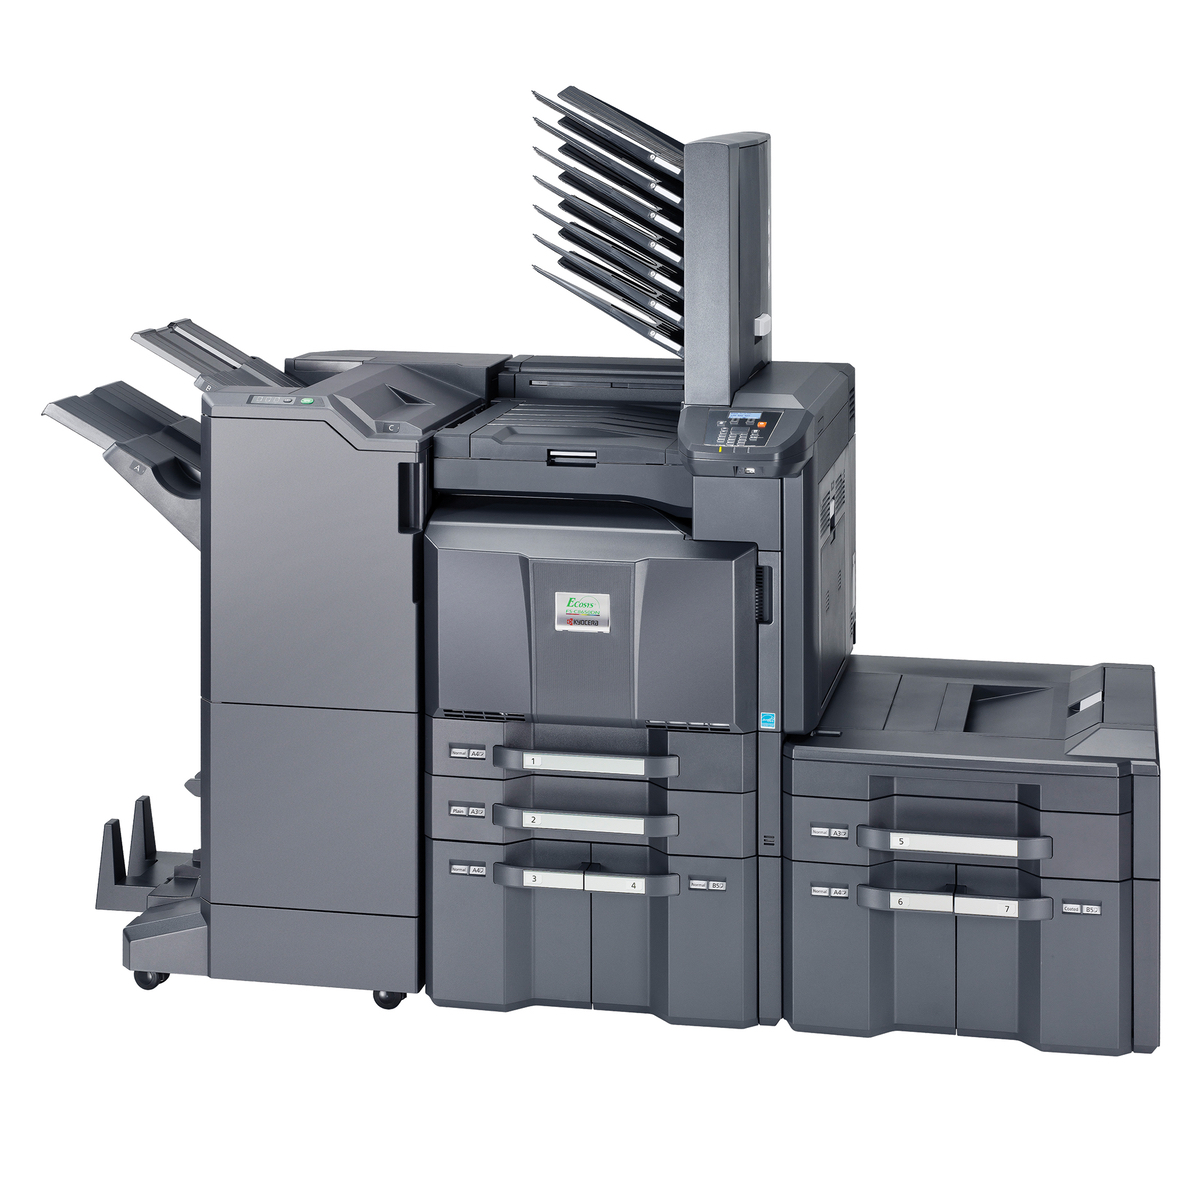 Kyocera FS-C8650DN Printer